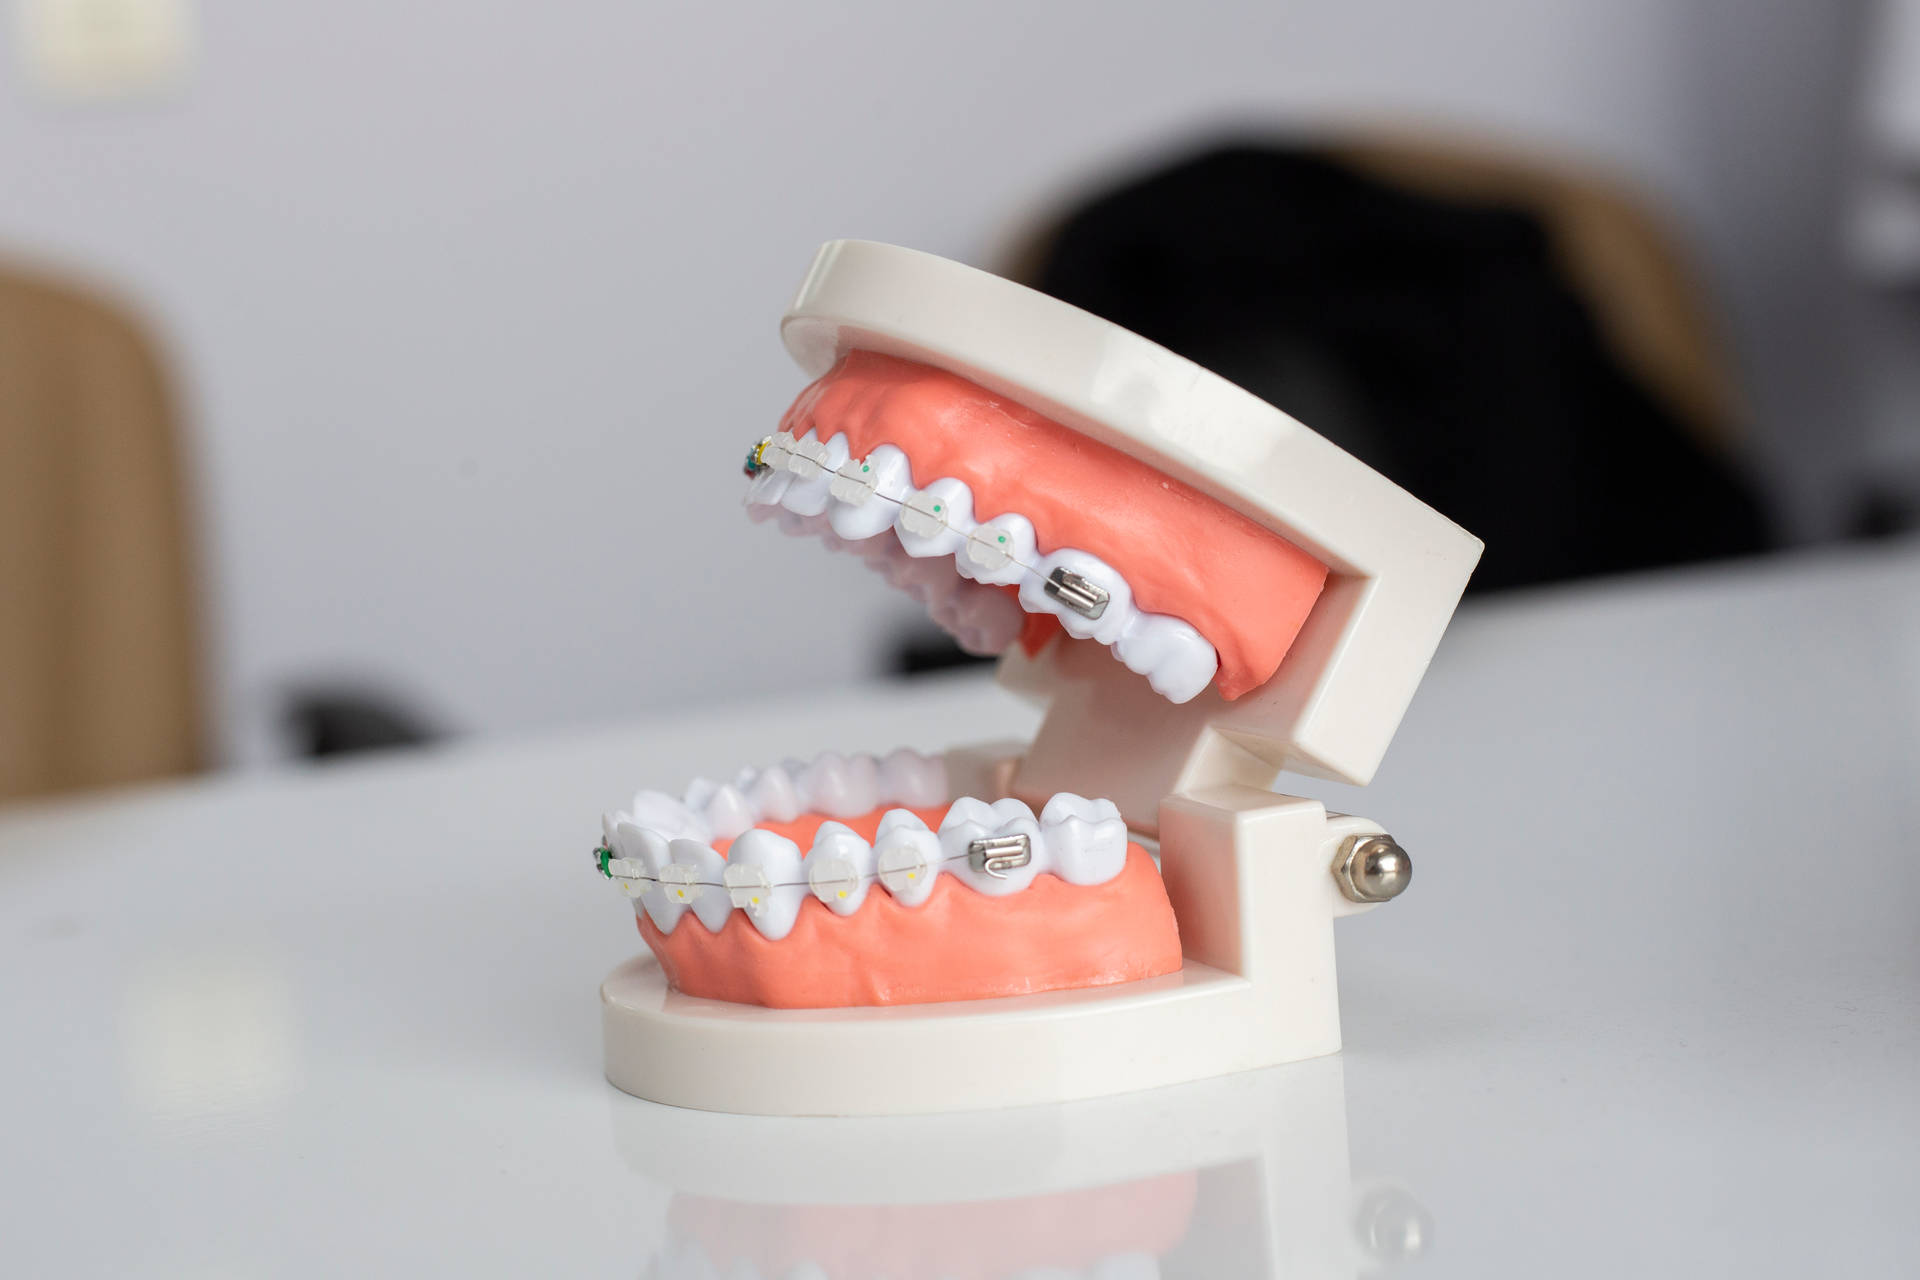 Dentistry Teeth Model With Braces